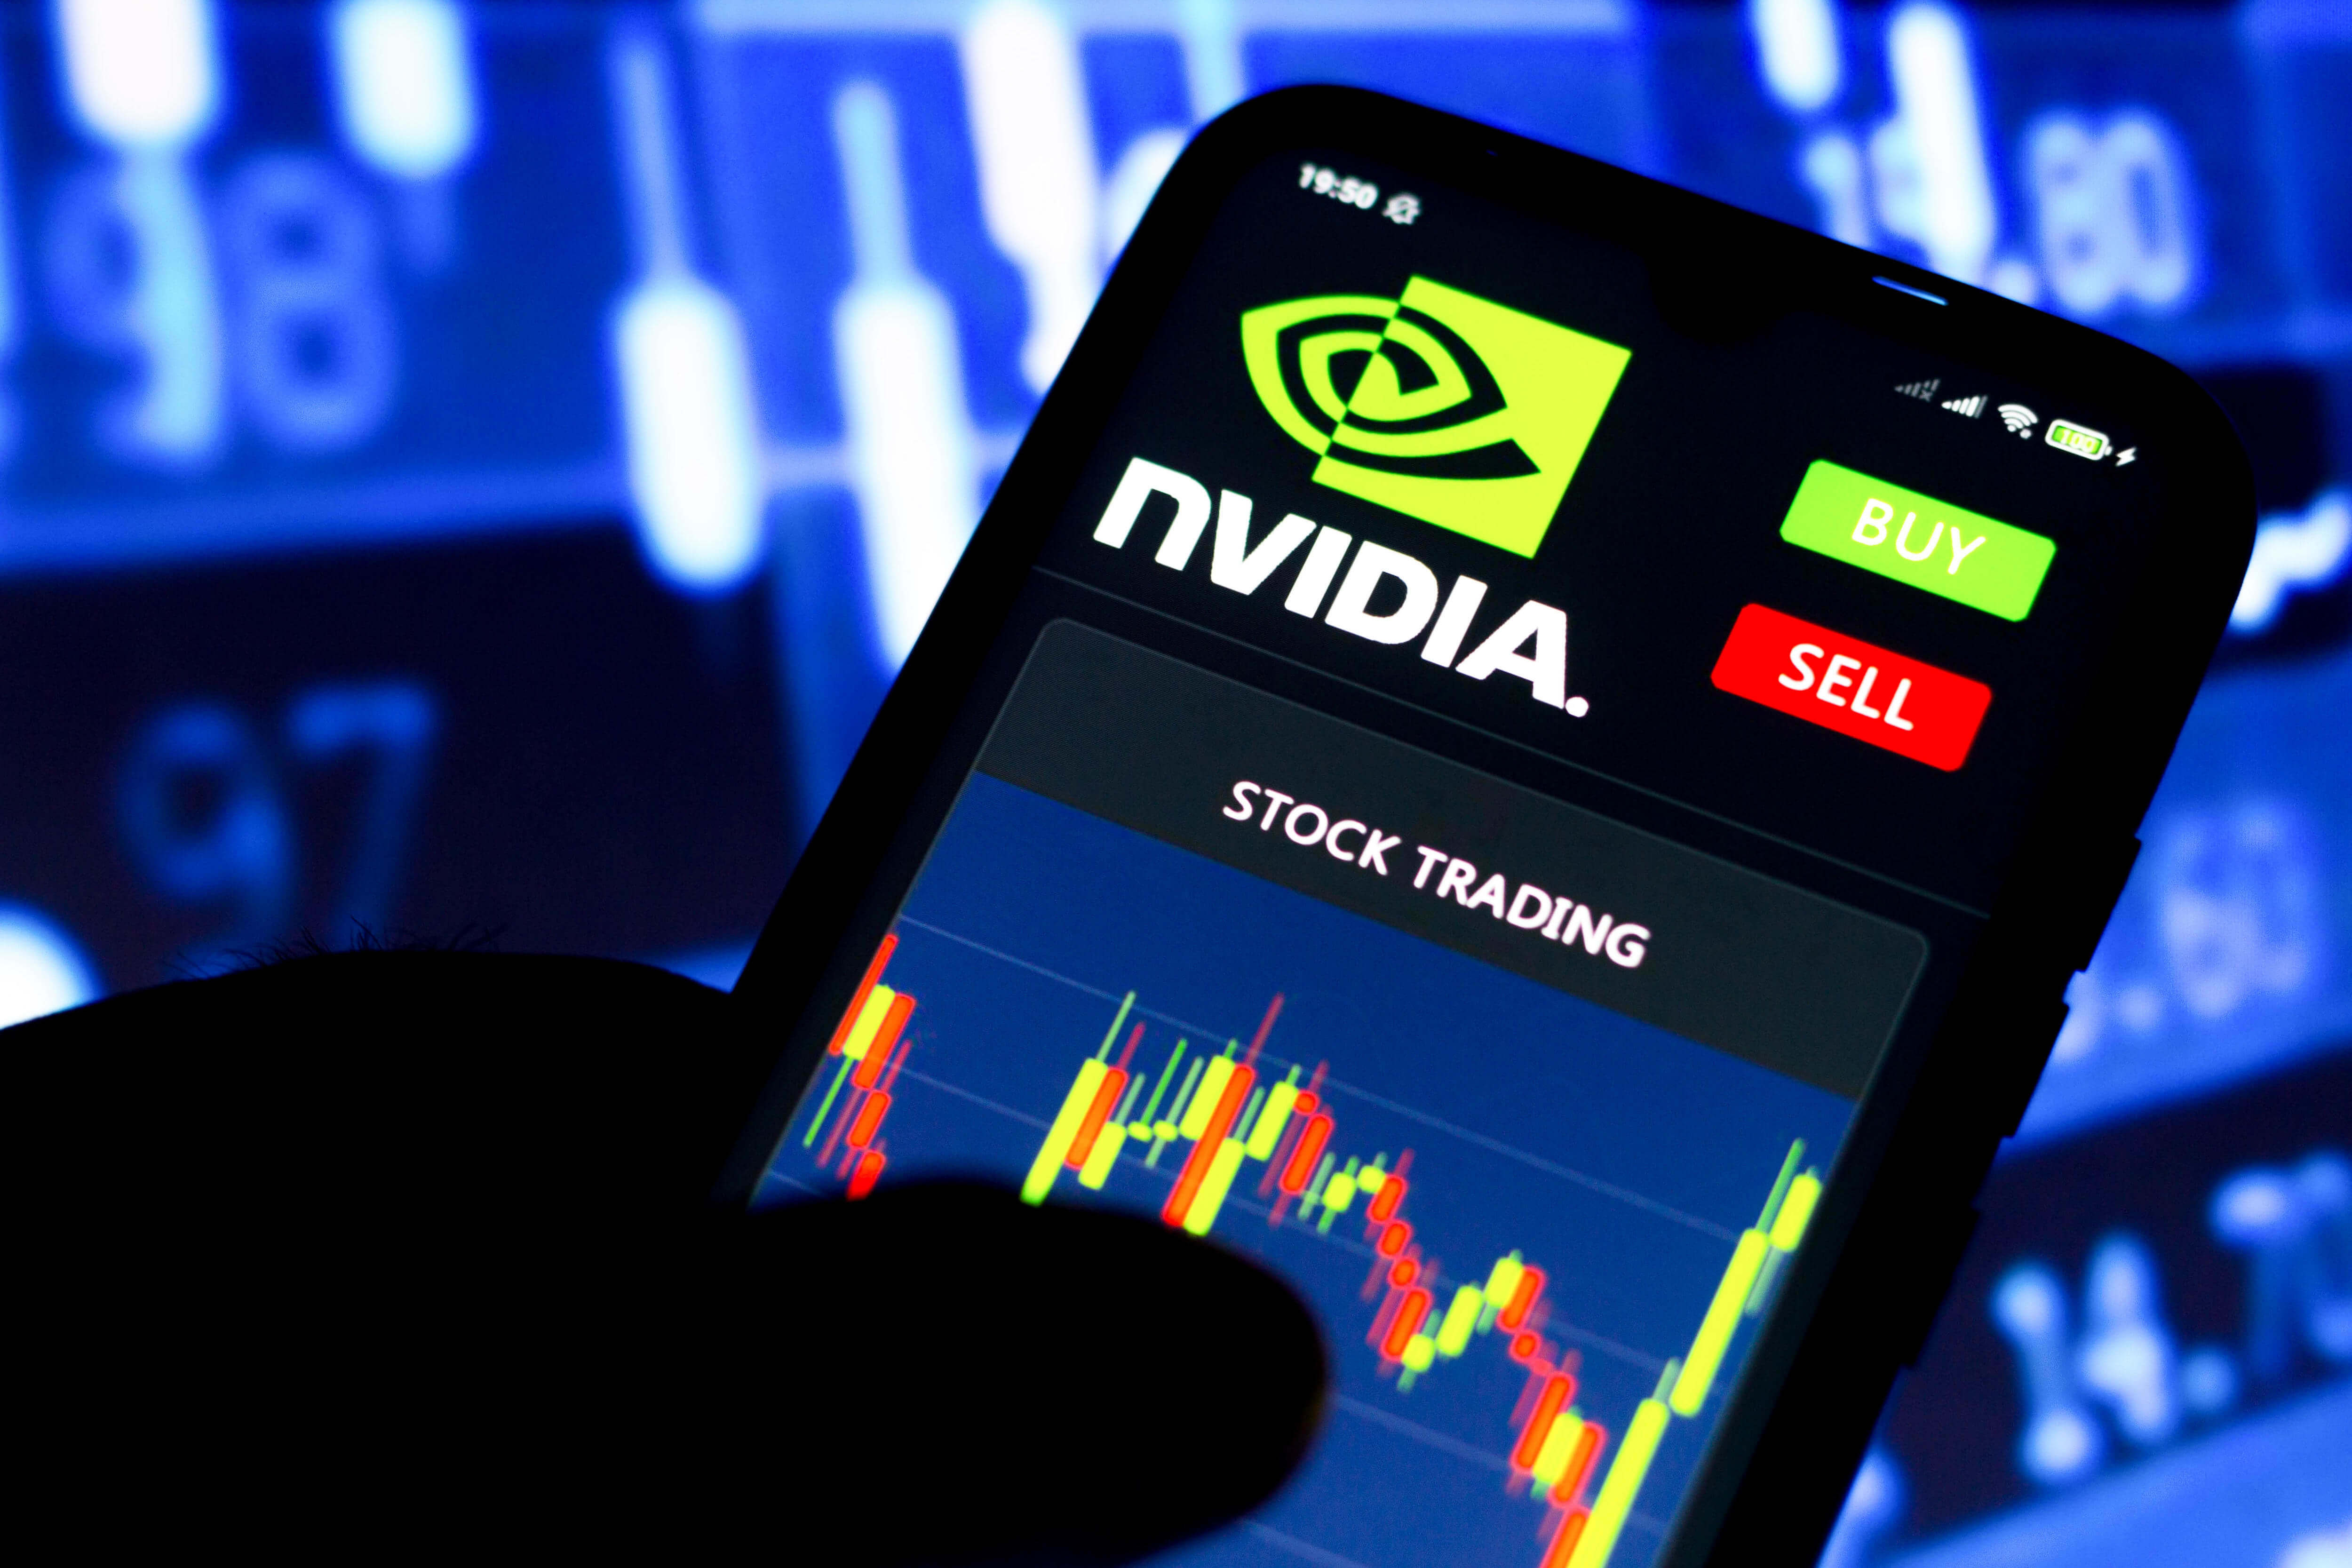 Nvidia (NASDAQ:NVDA) Stock Analysis: Market Dominance and Future Growth